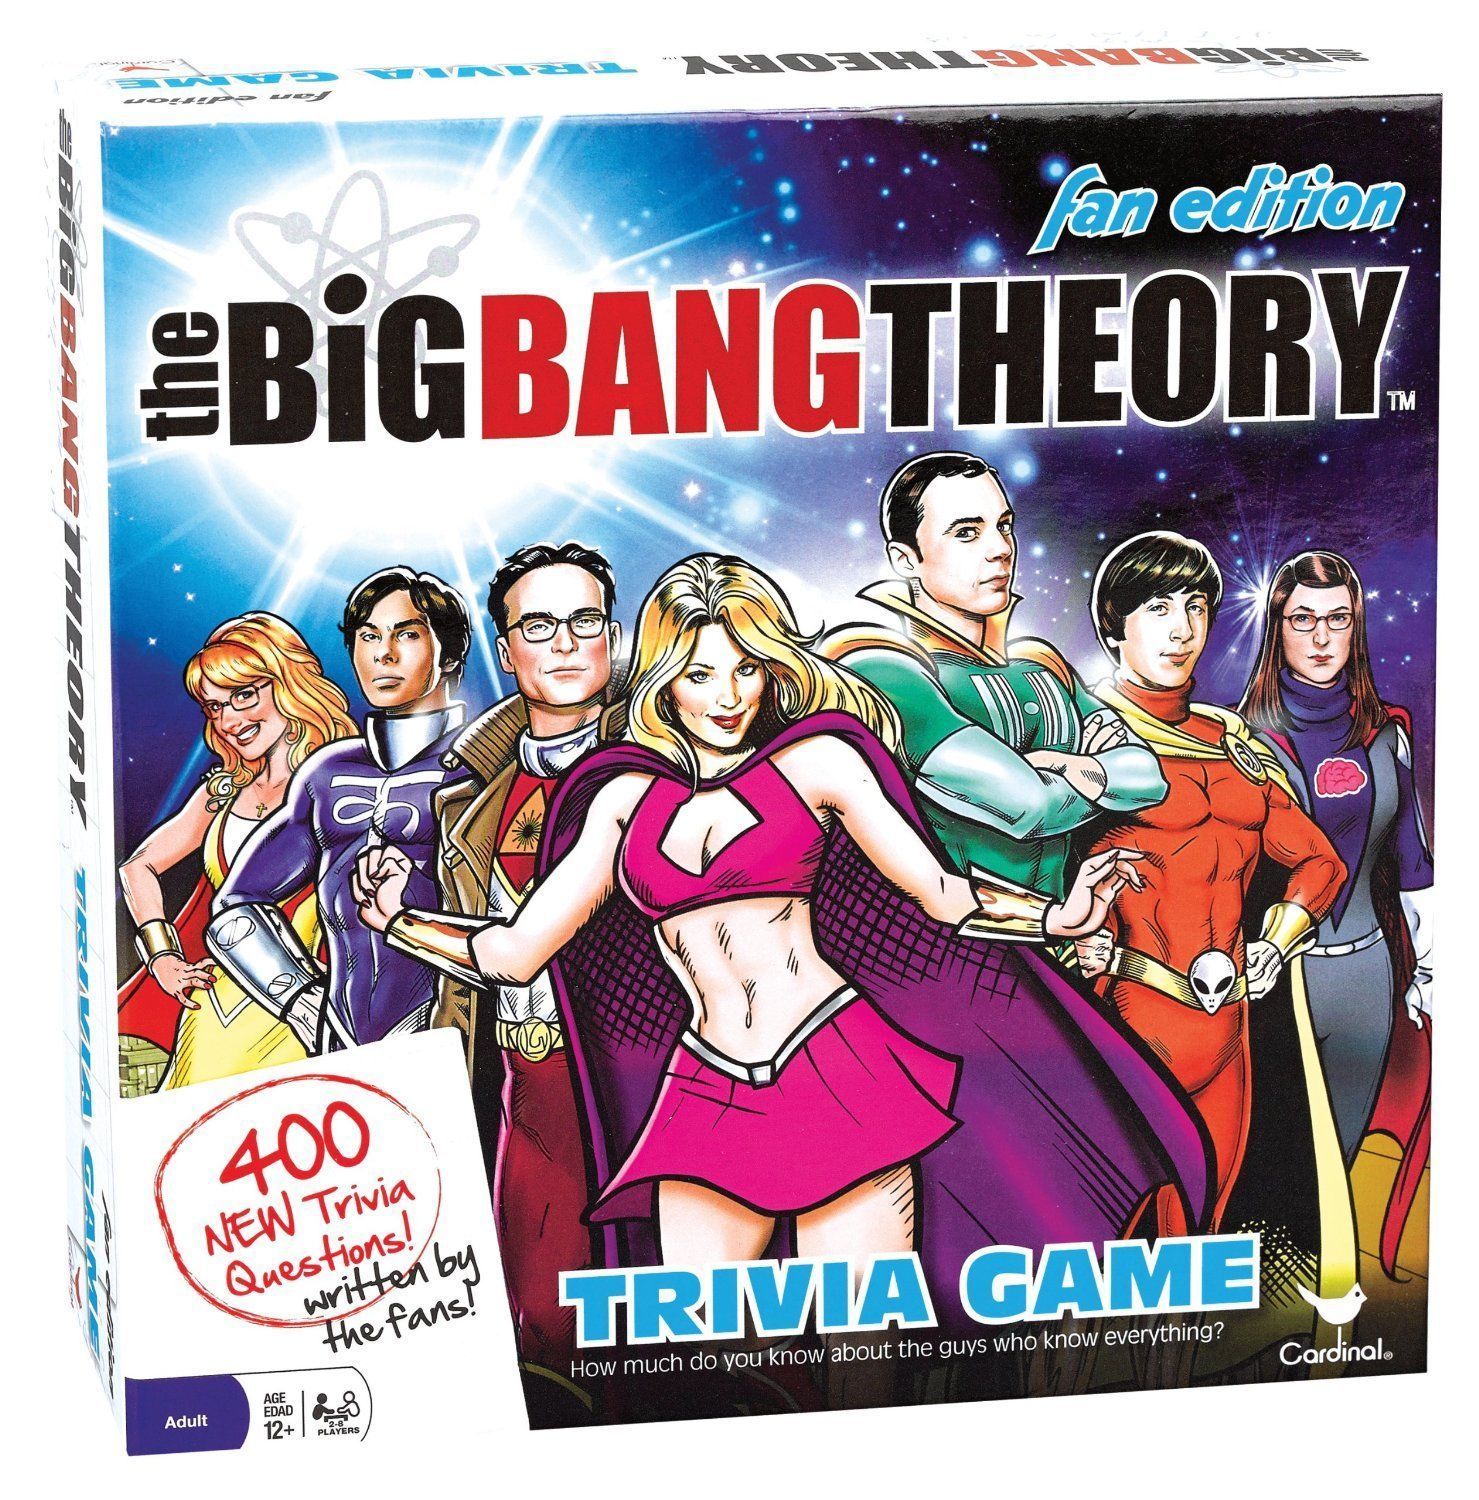 The Big Bang Theory: Fact or Fiction Game